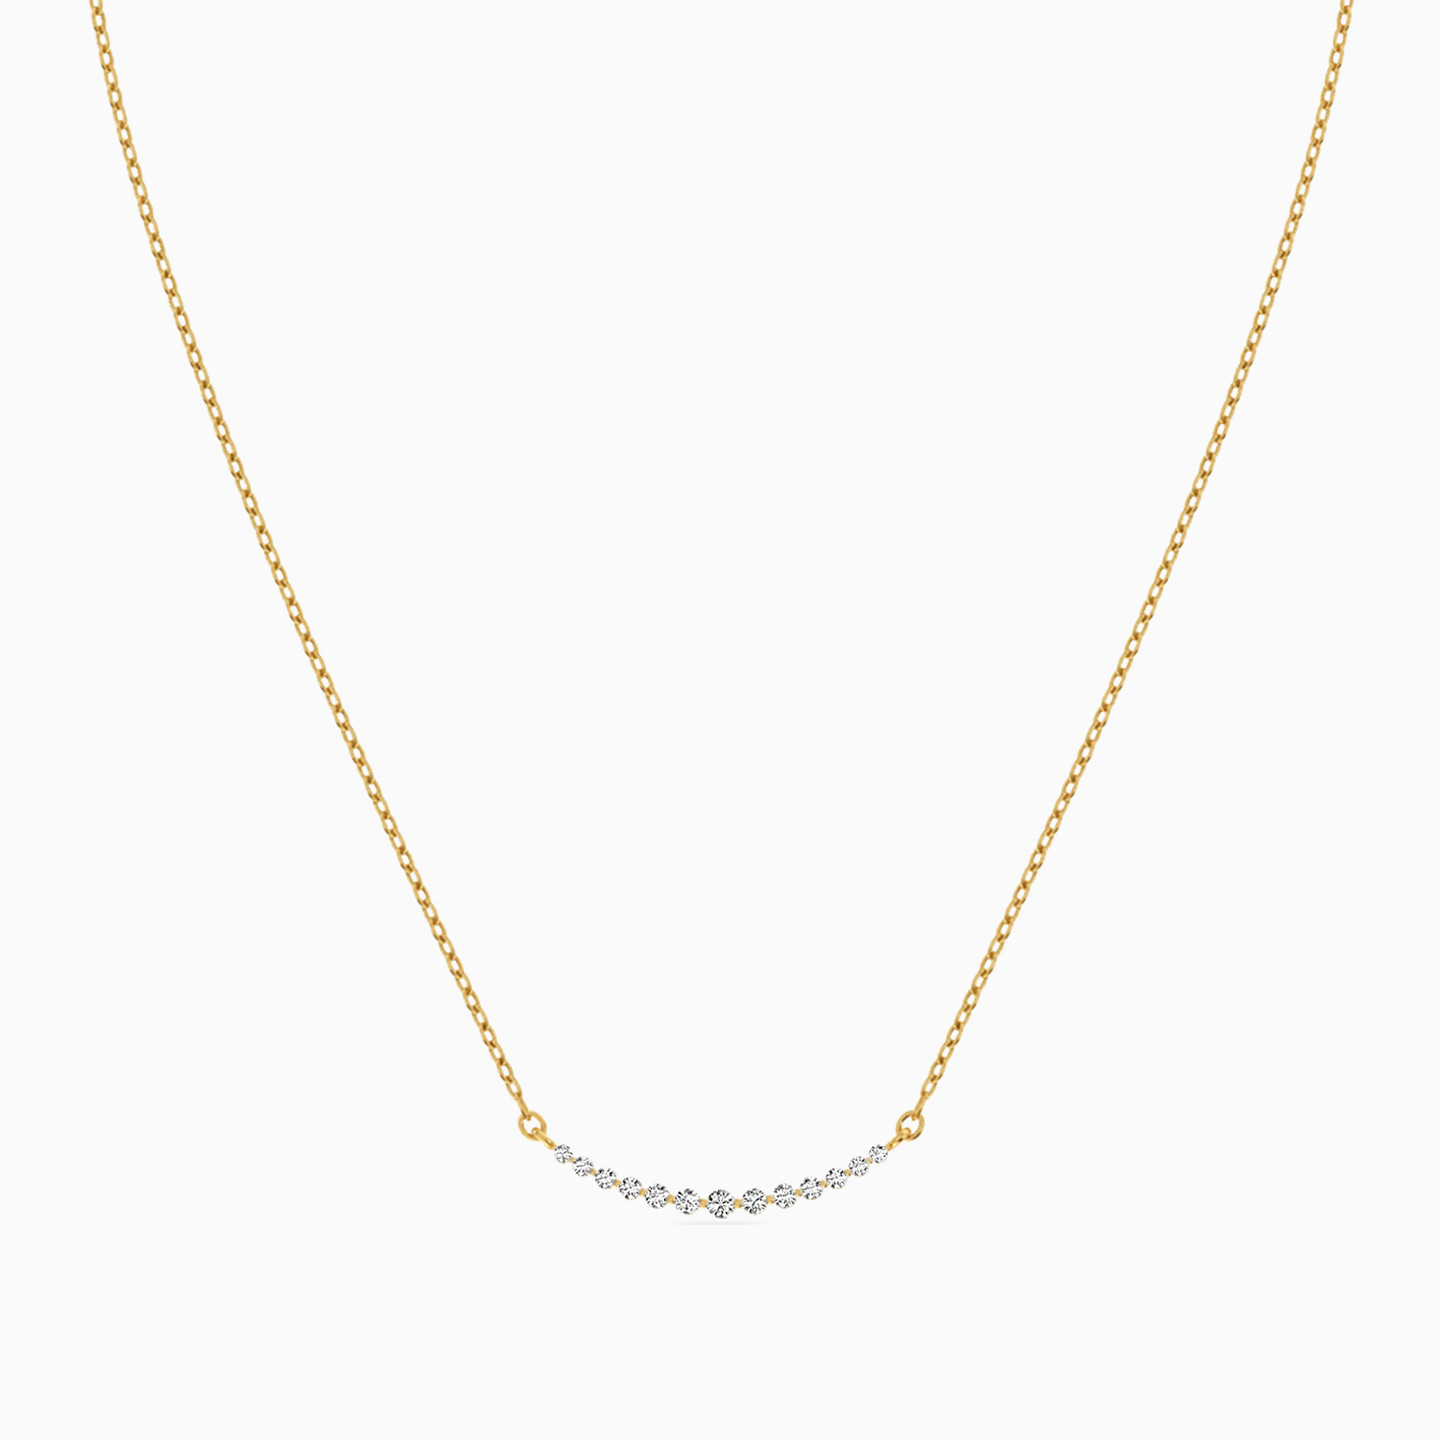 18K Gold Diamond Chain Necklace - 2